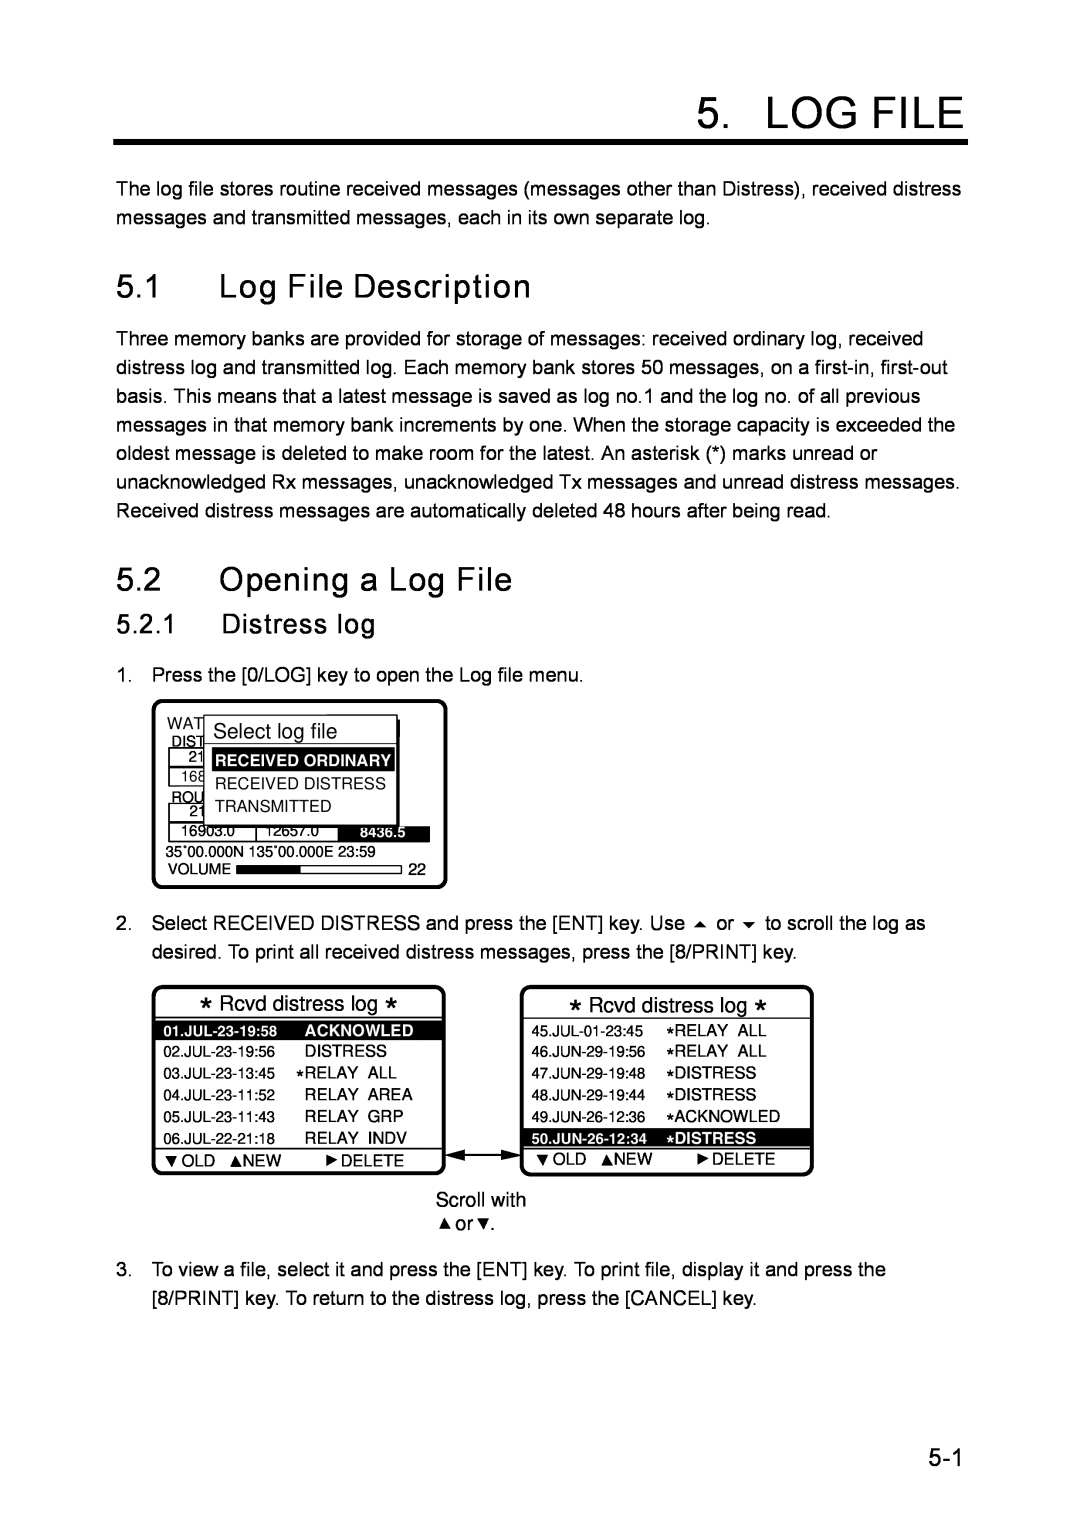 Furuno RC-1500-1T manual Log File Description, Opening a Log File, Distress log 